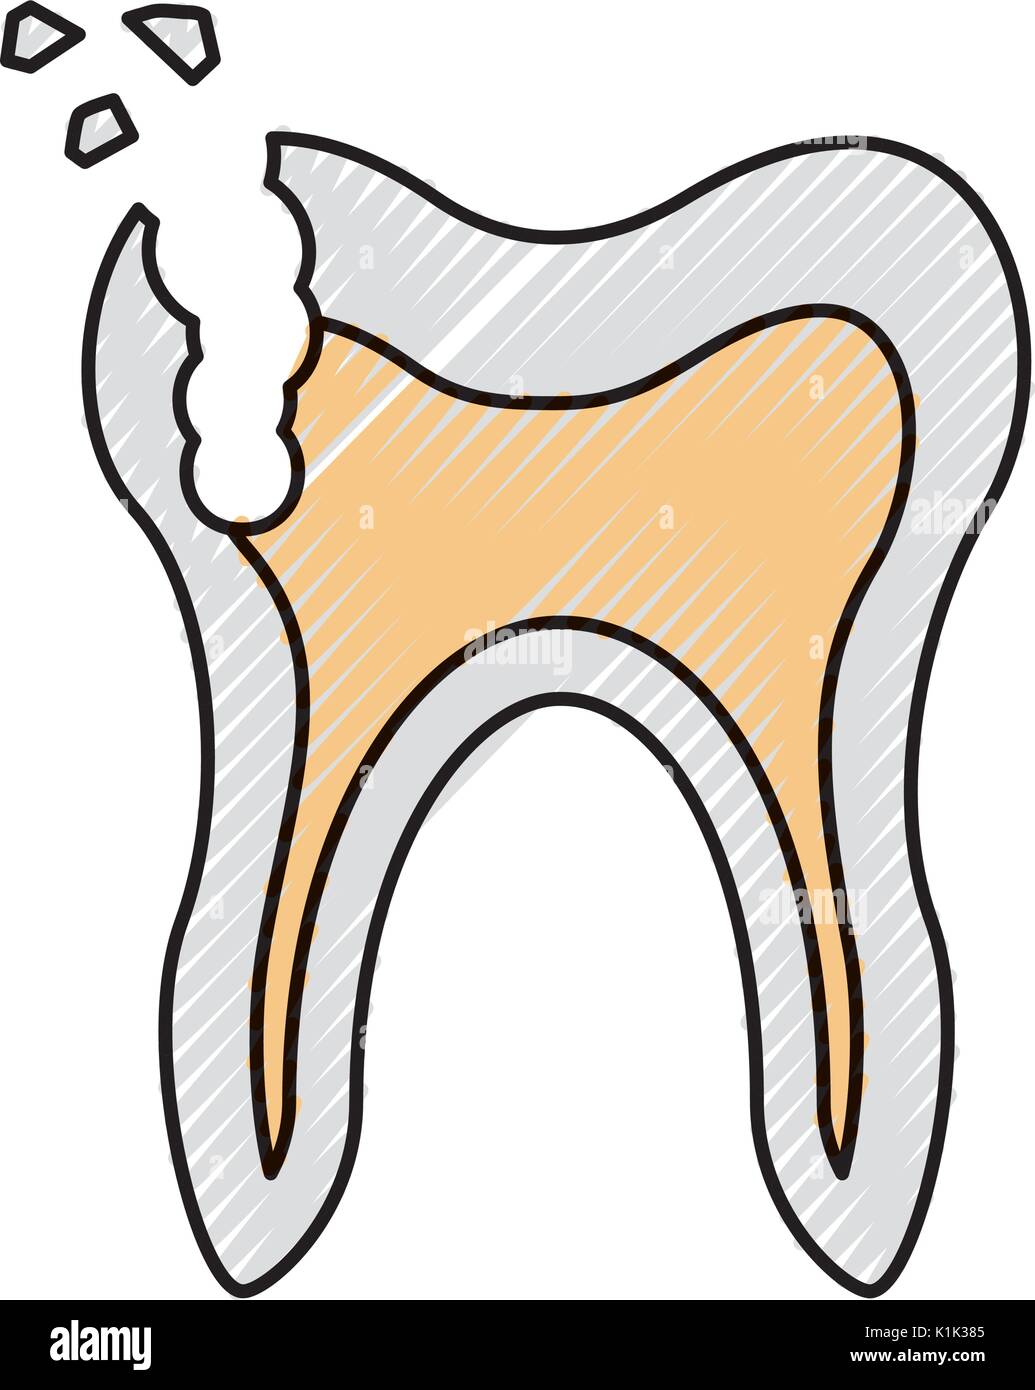 Menschliche Zahn mit Karies Stock Vektor